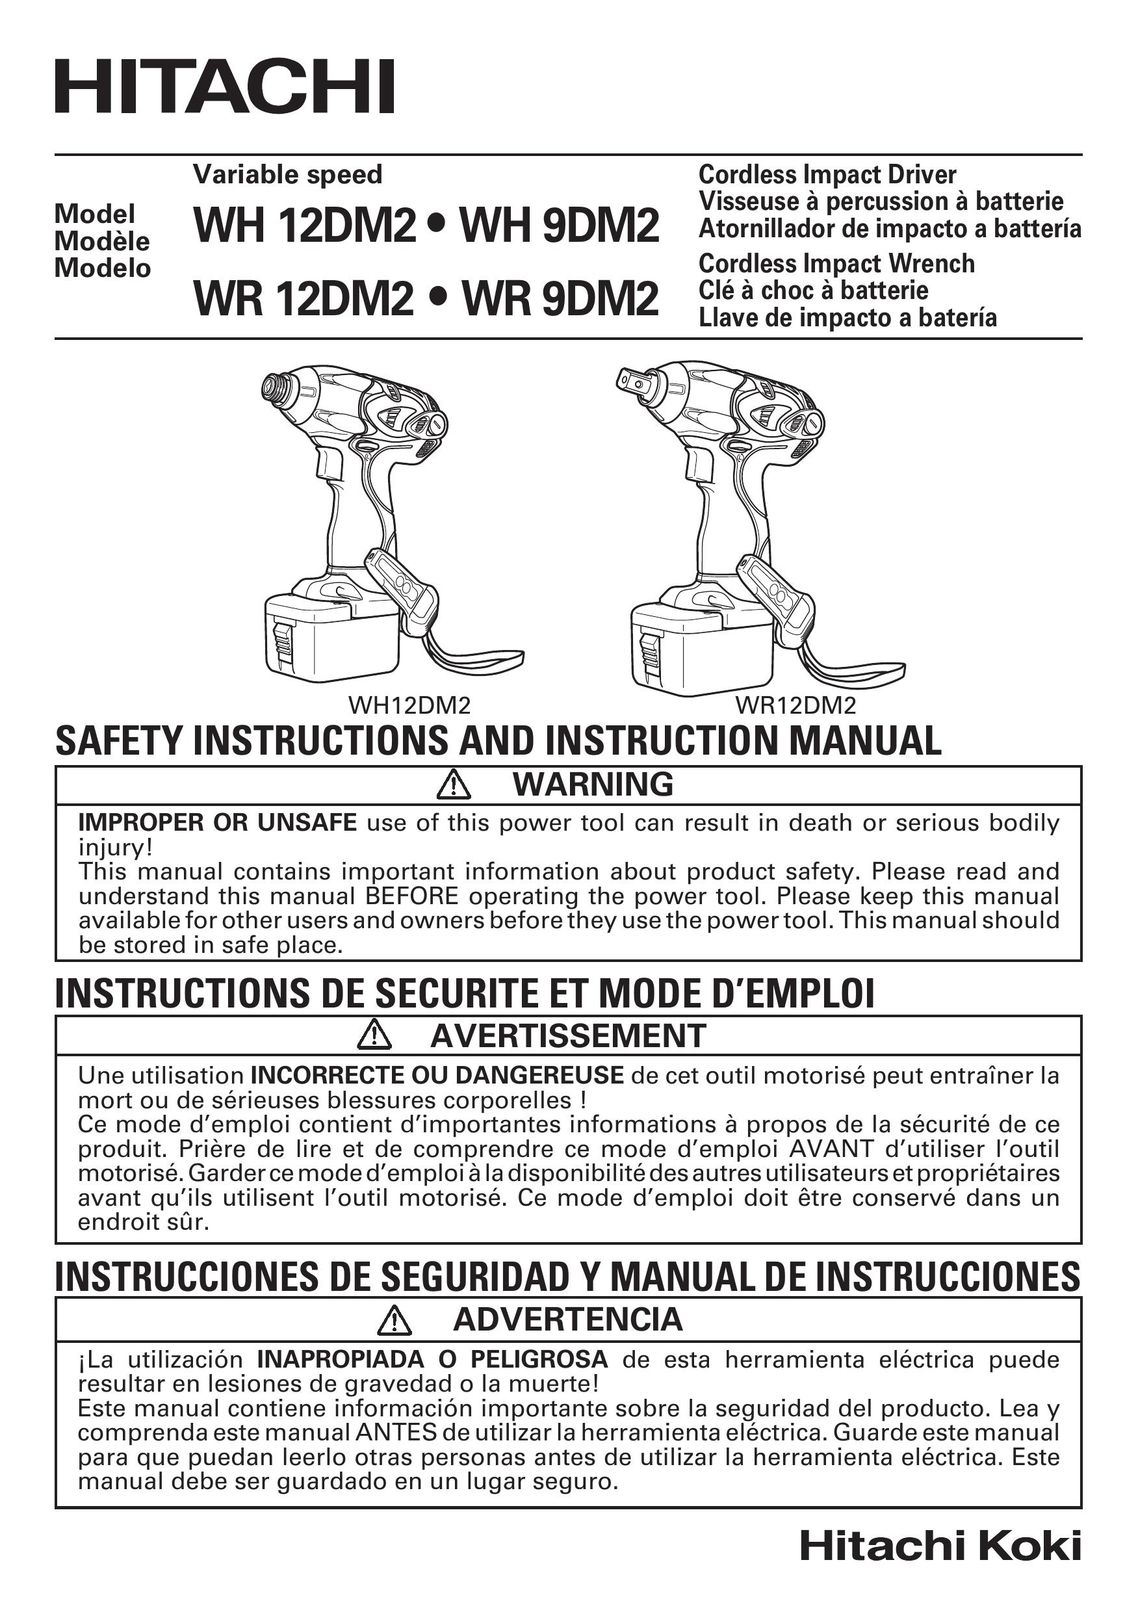 Hitachi WR9DM2 Impact Driver User Manual